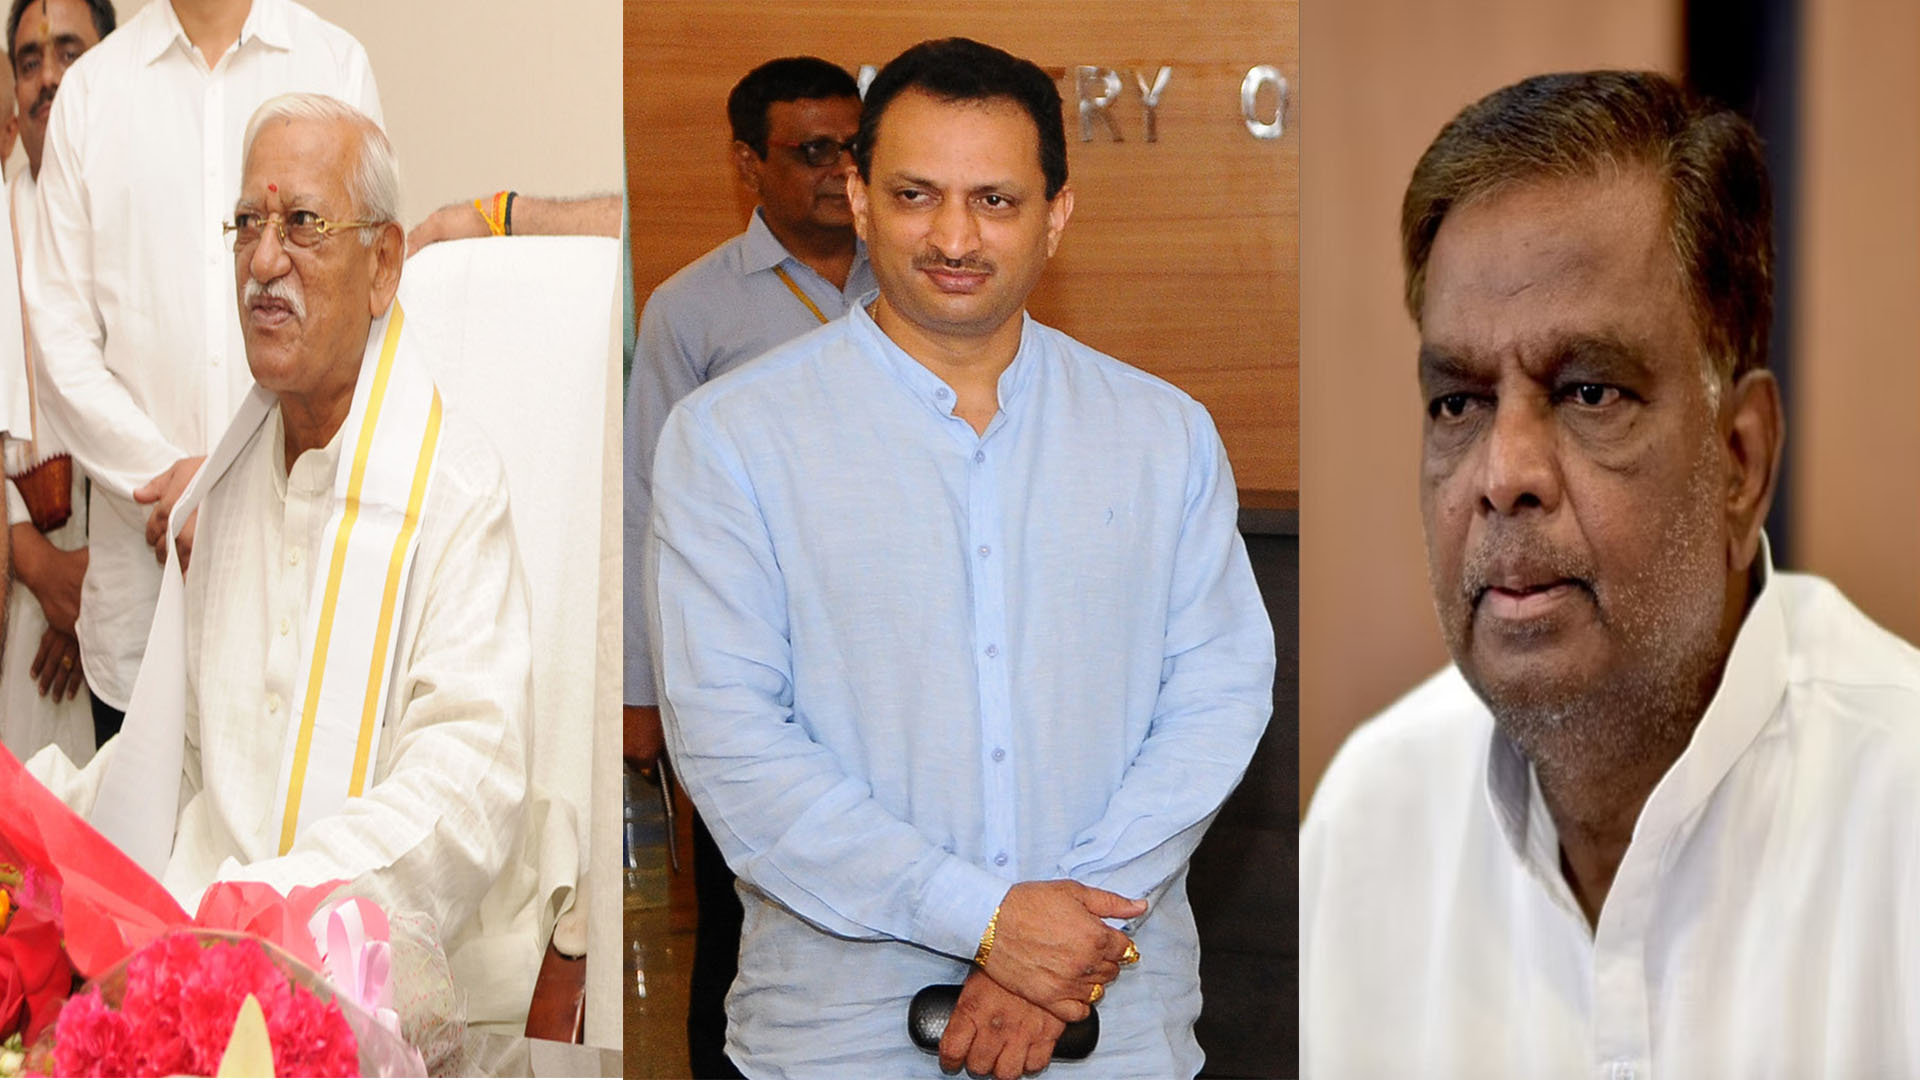 Mute representatives: Three Karnataka MPs spoke nothing in 17th Lok Sabha